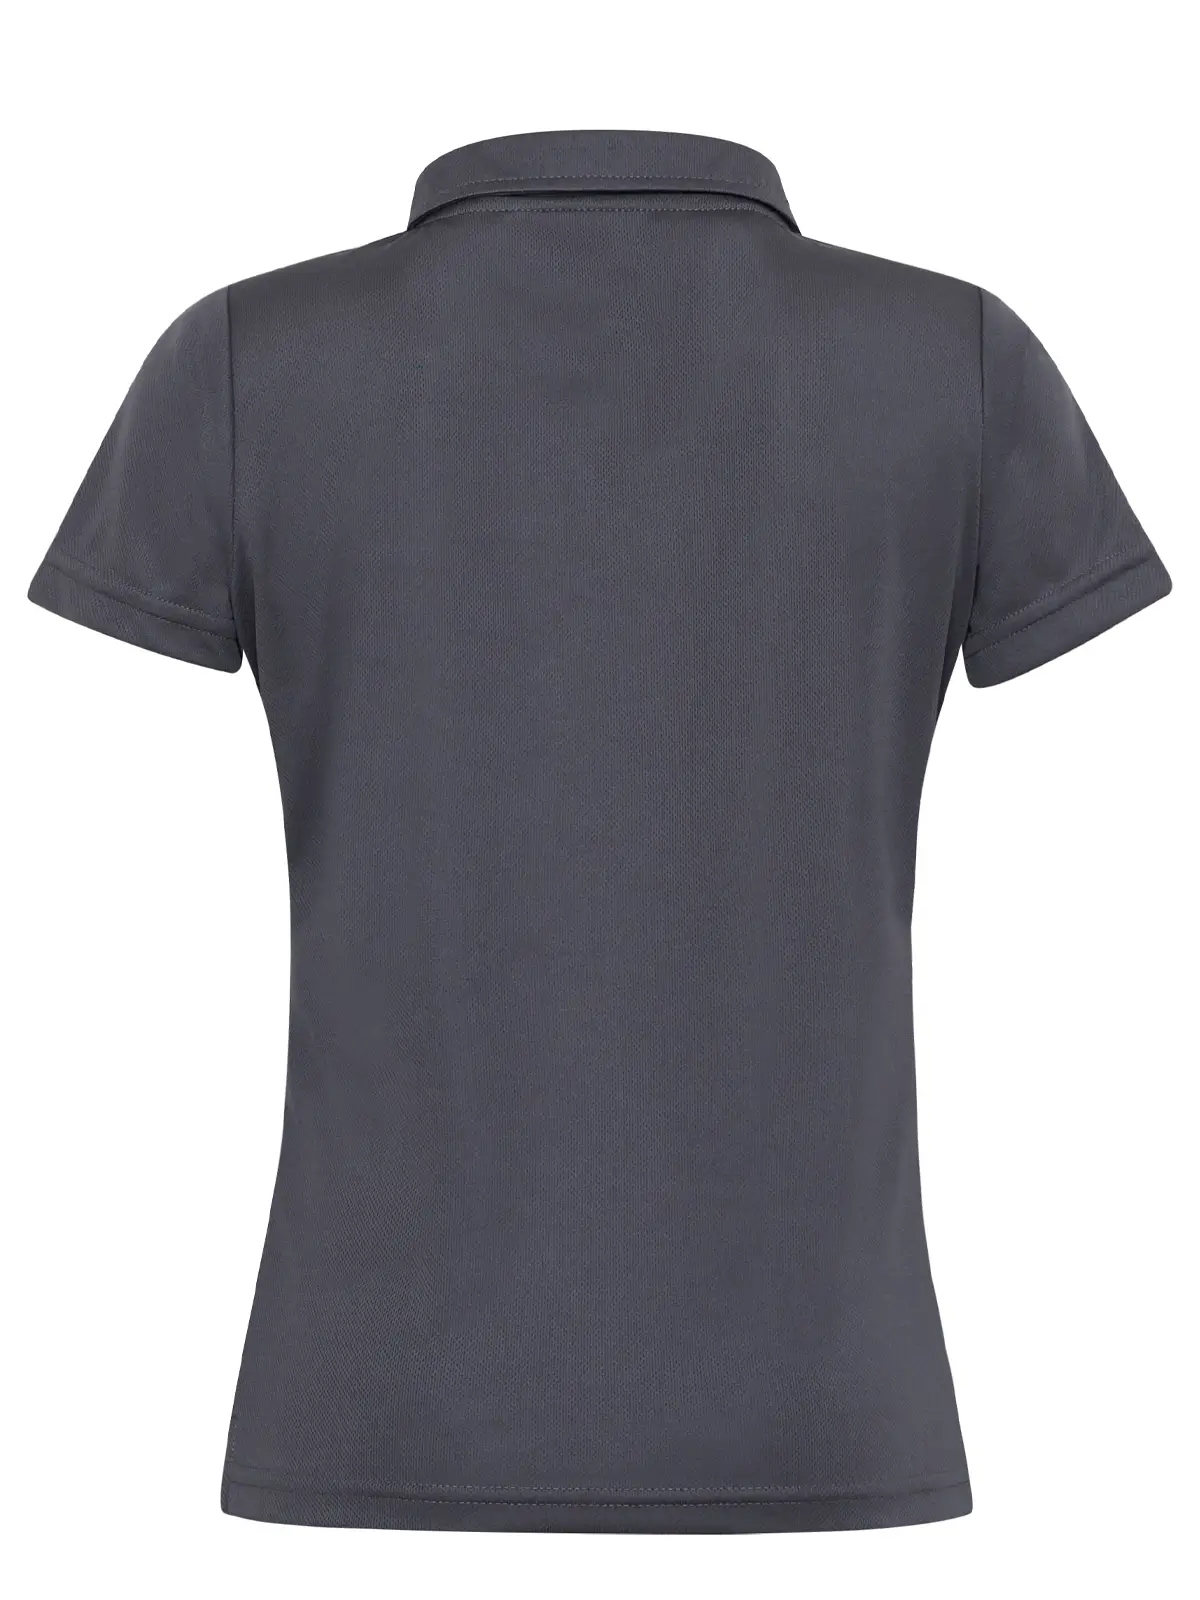 P900 gray polo shirt for women rear view